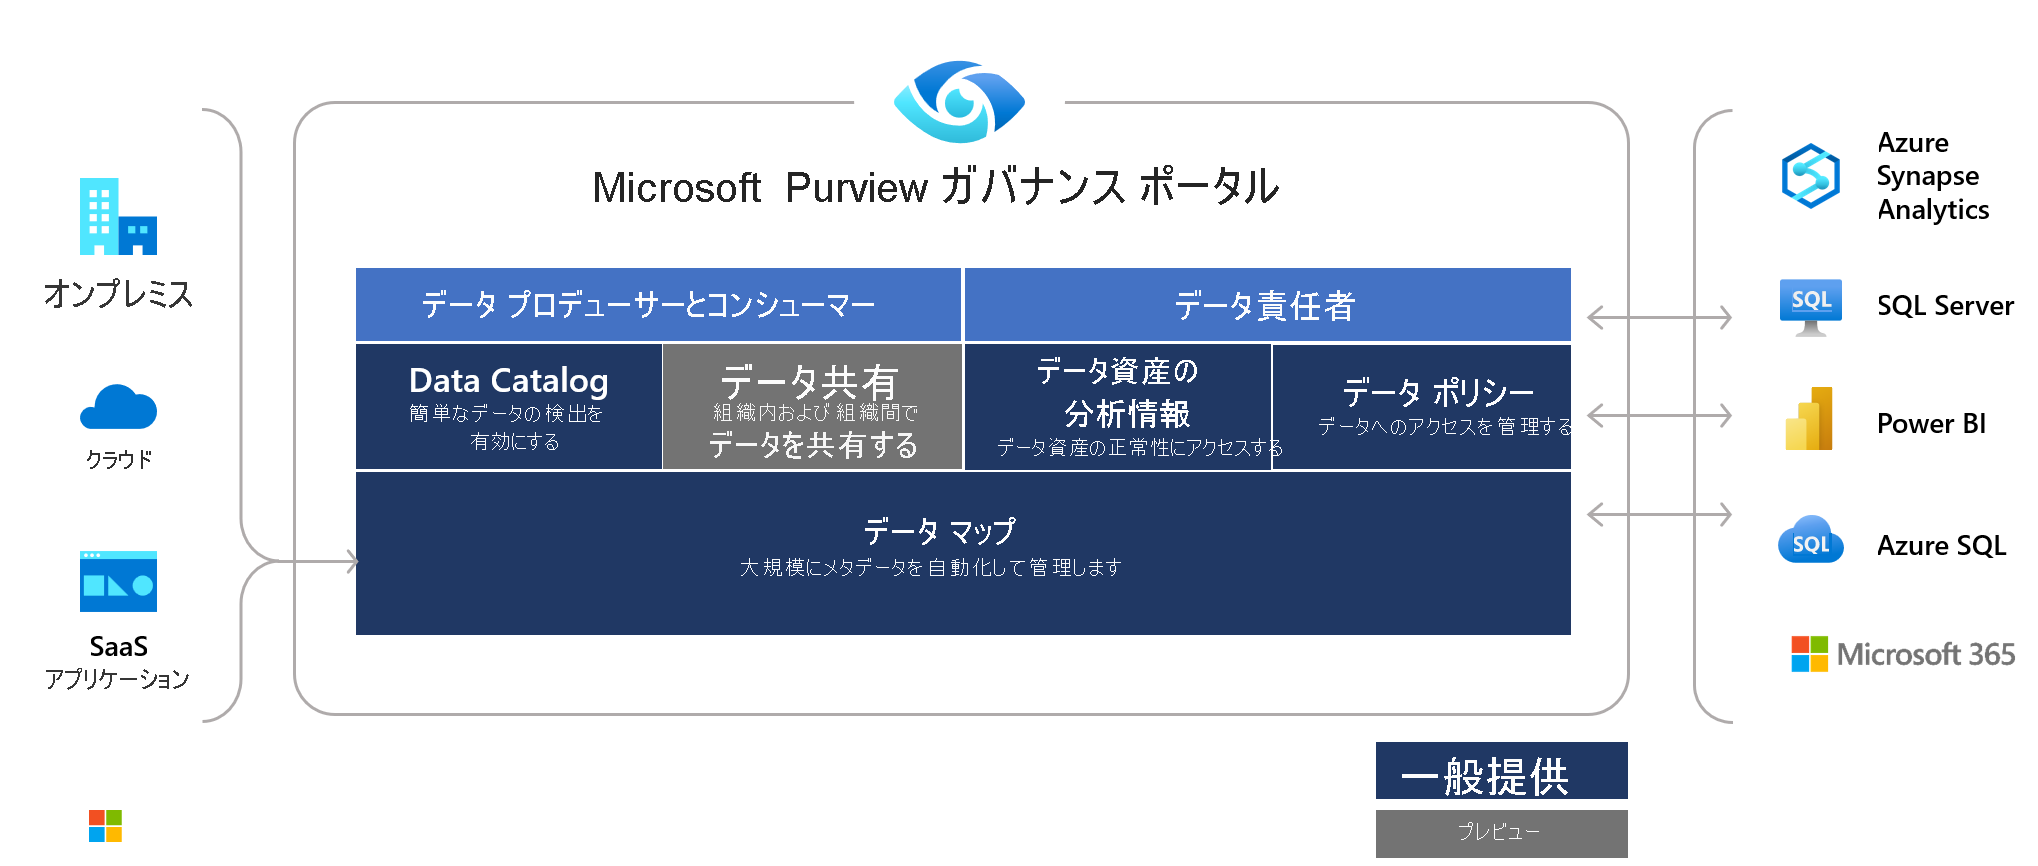 Screenshot of Microsoft Purview high level architecture.